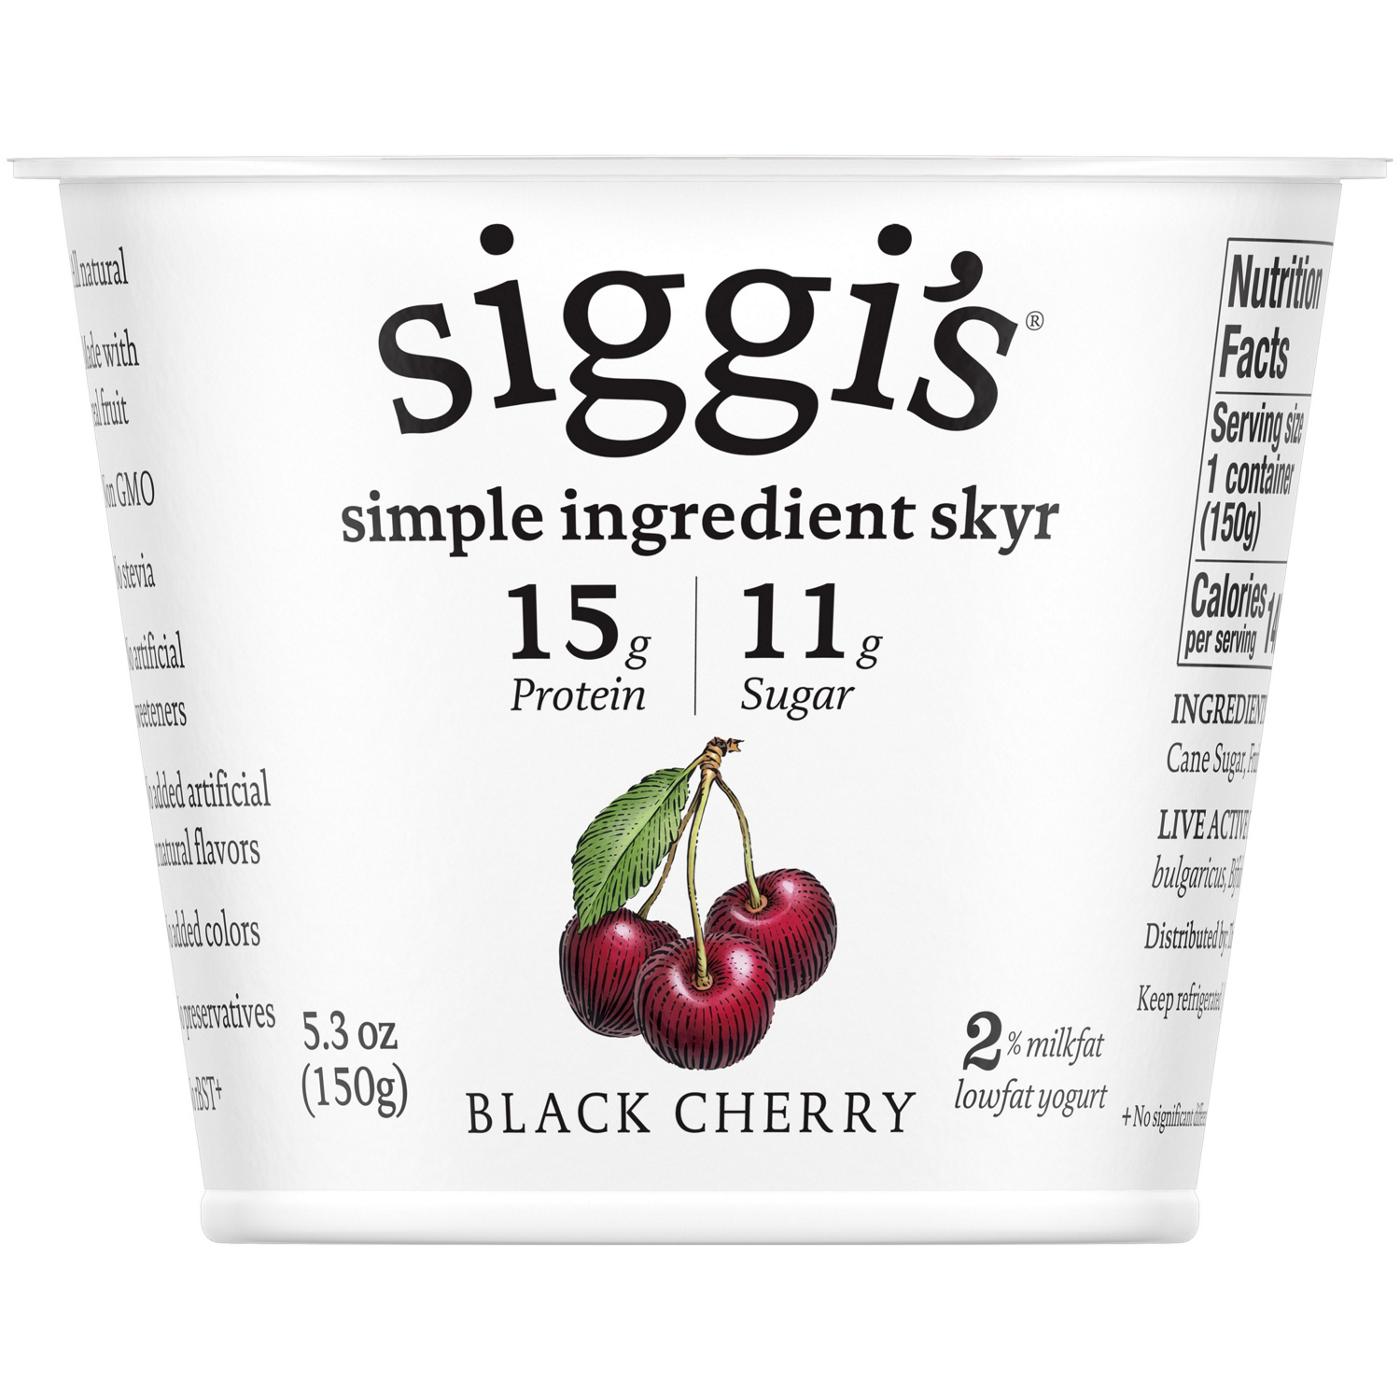 Siggi's 2% Non-Fat Strained Cream Skyr Black Cherry Yogurt; image 1 of 4